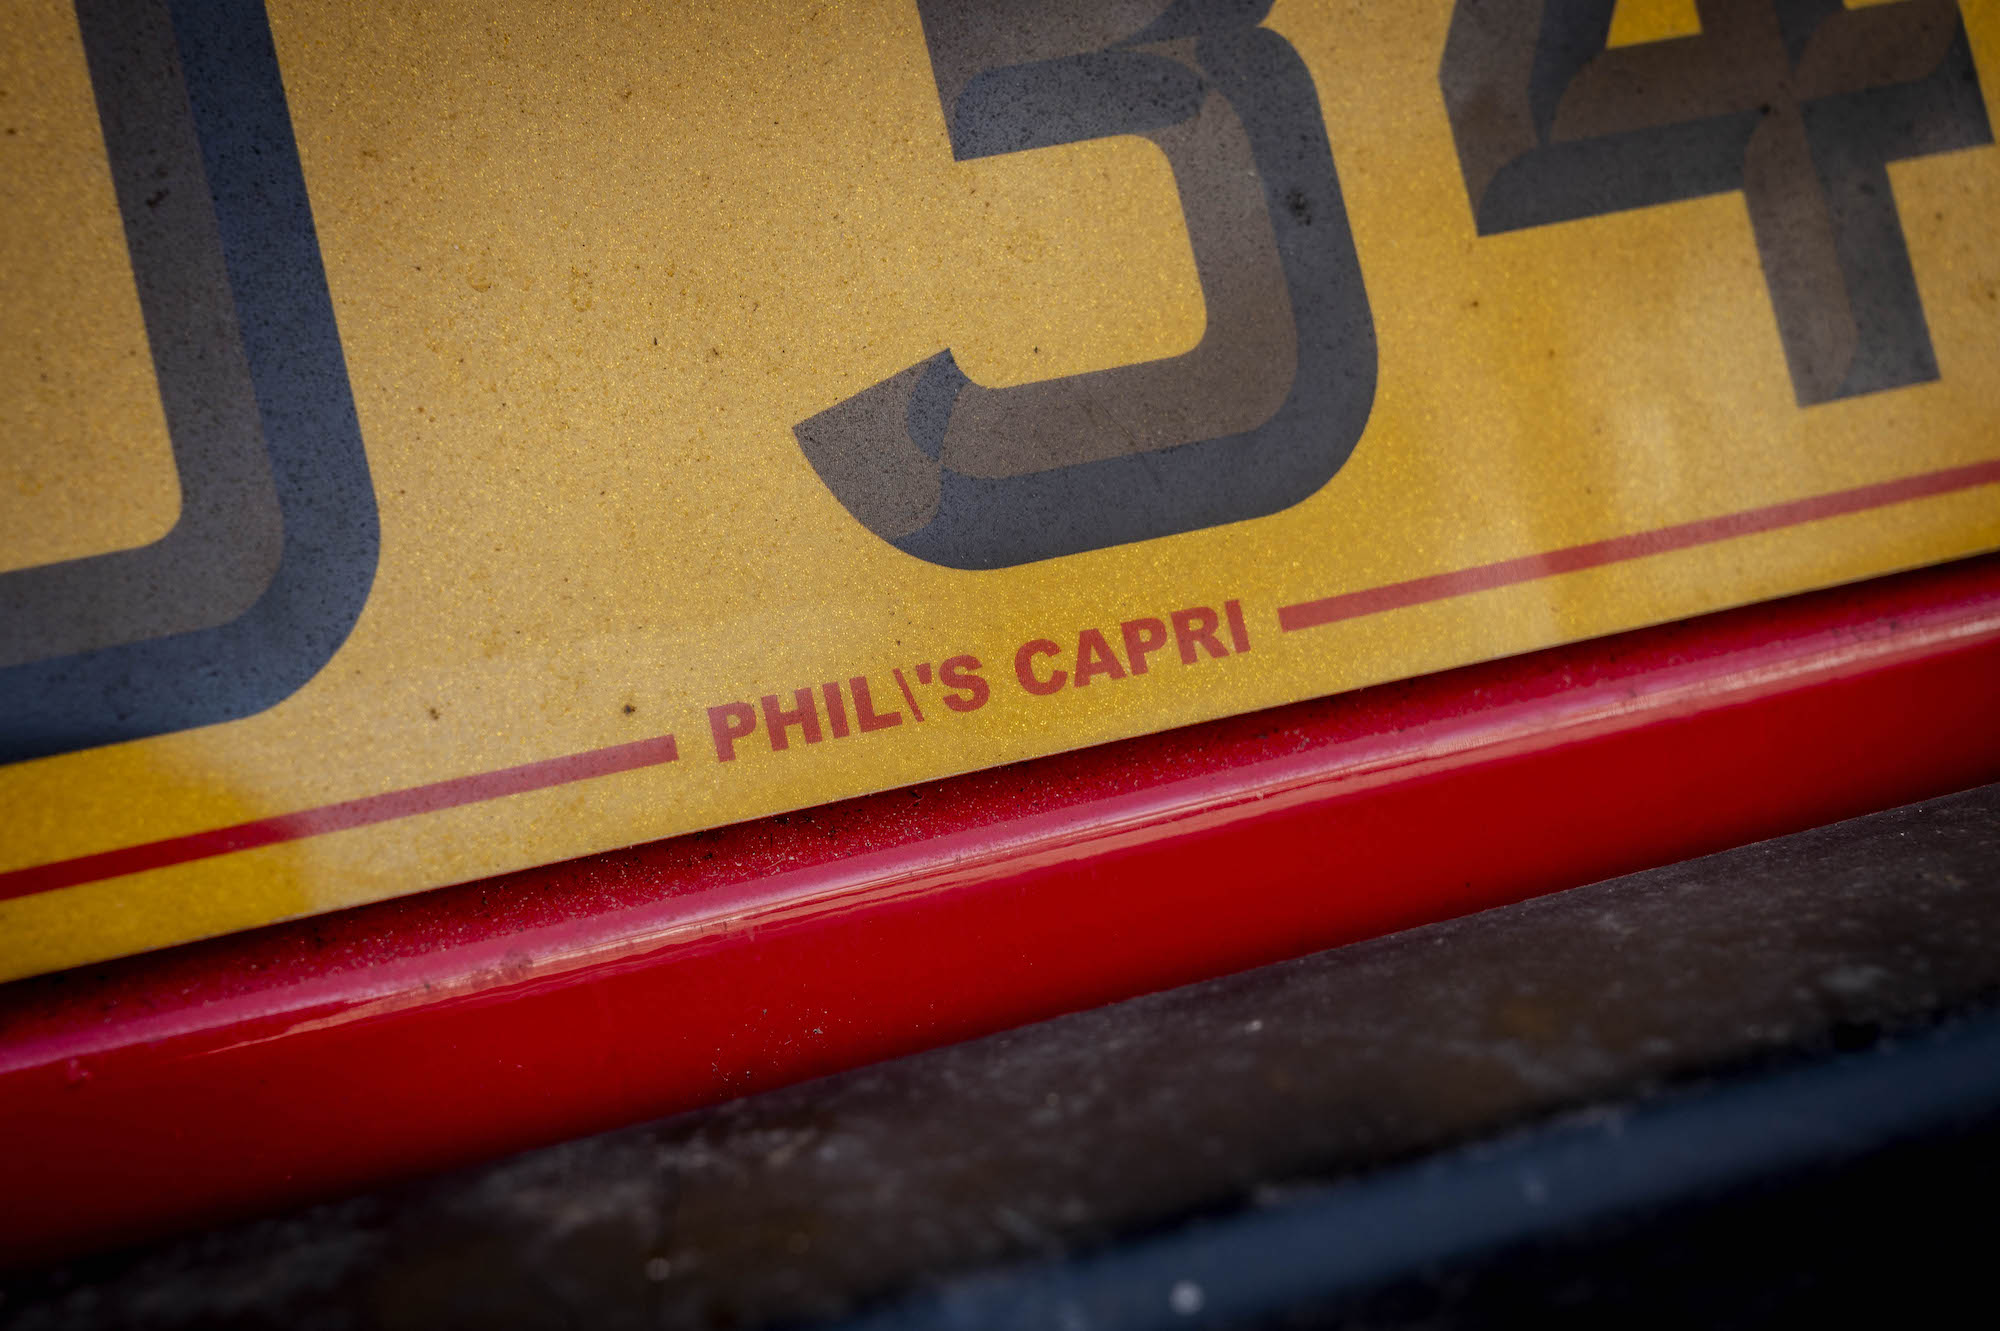 Phil's Capri number plate